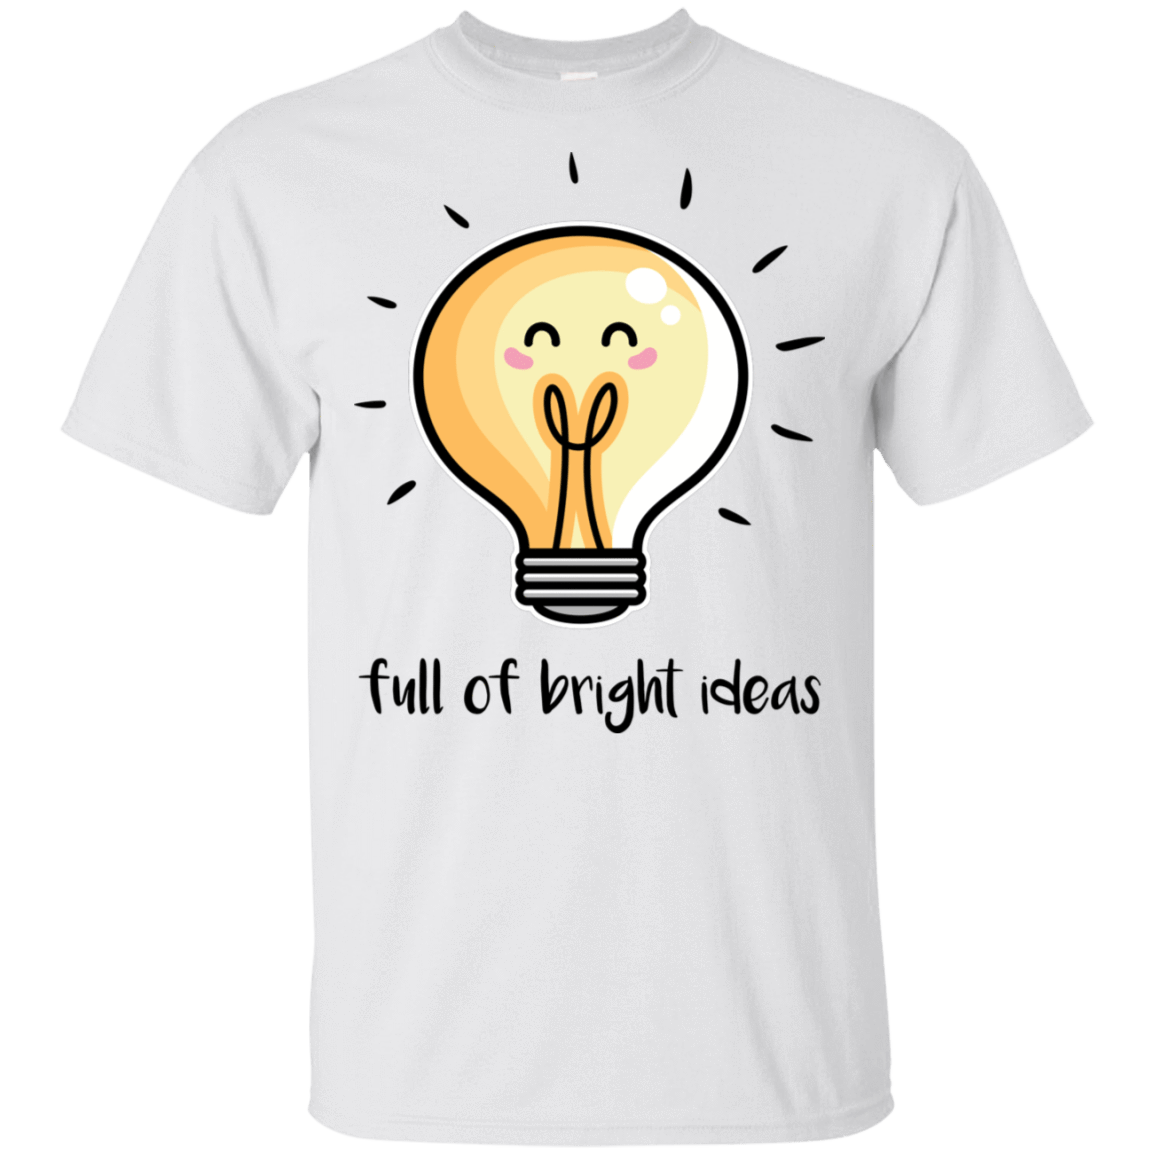 T-Shirts White / S Full of Bright Ideas T-Shirt